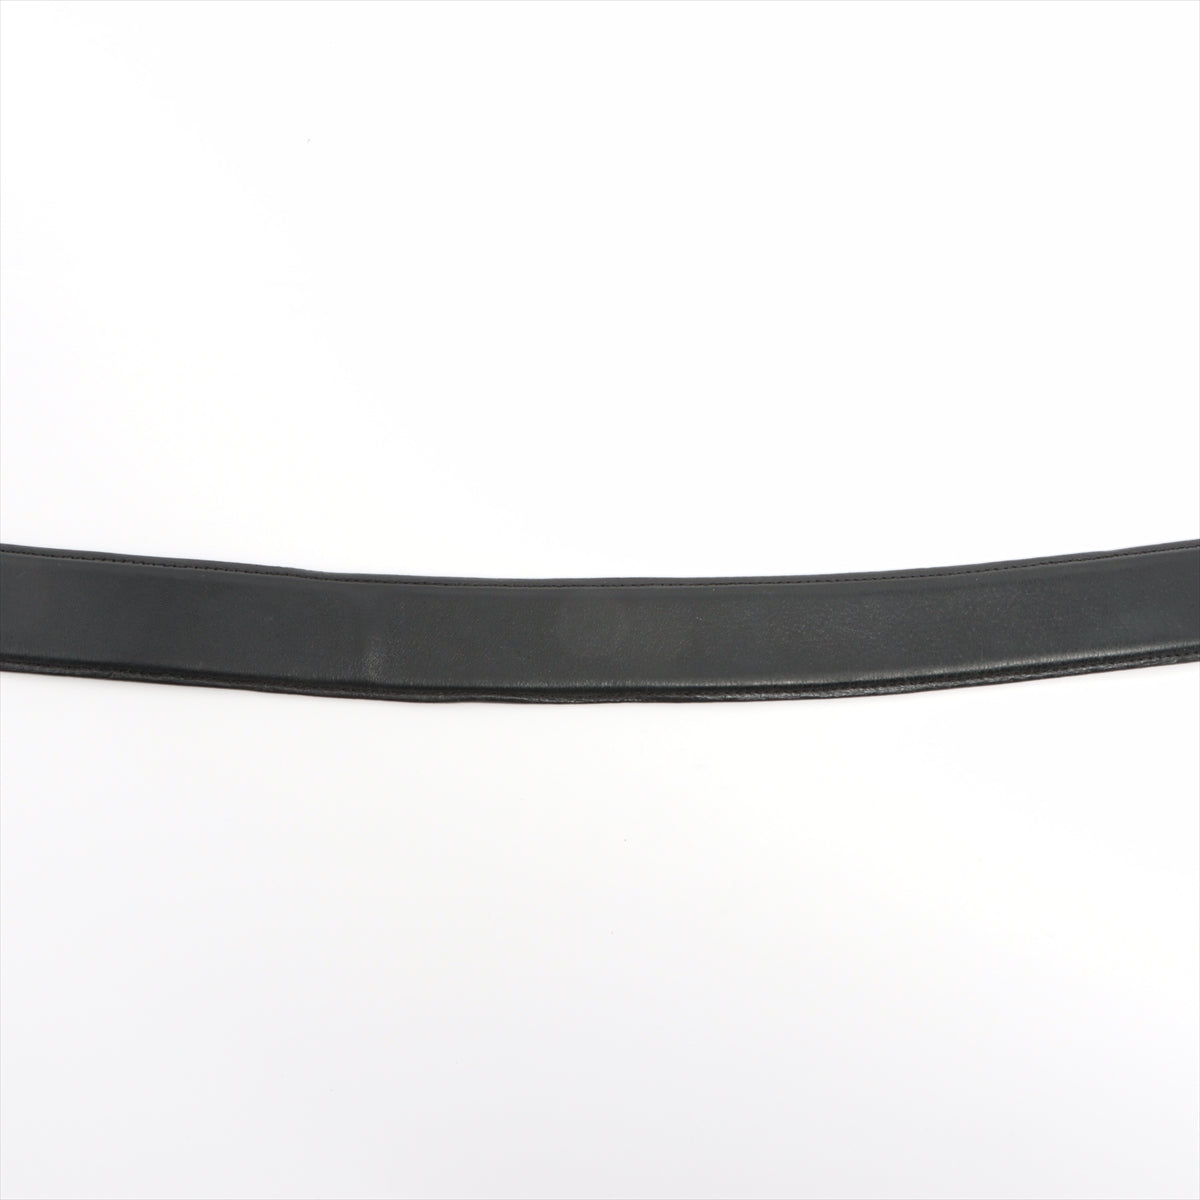 Chrome Hearts classic 3pc Belt Leather & 925 size 34 Black × Silver